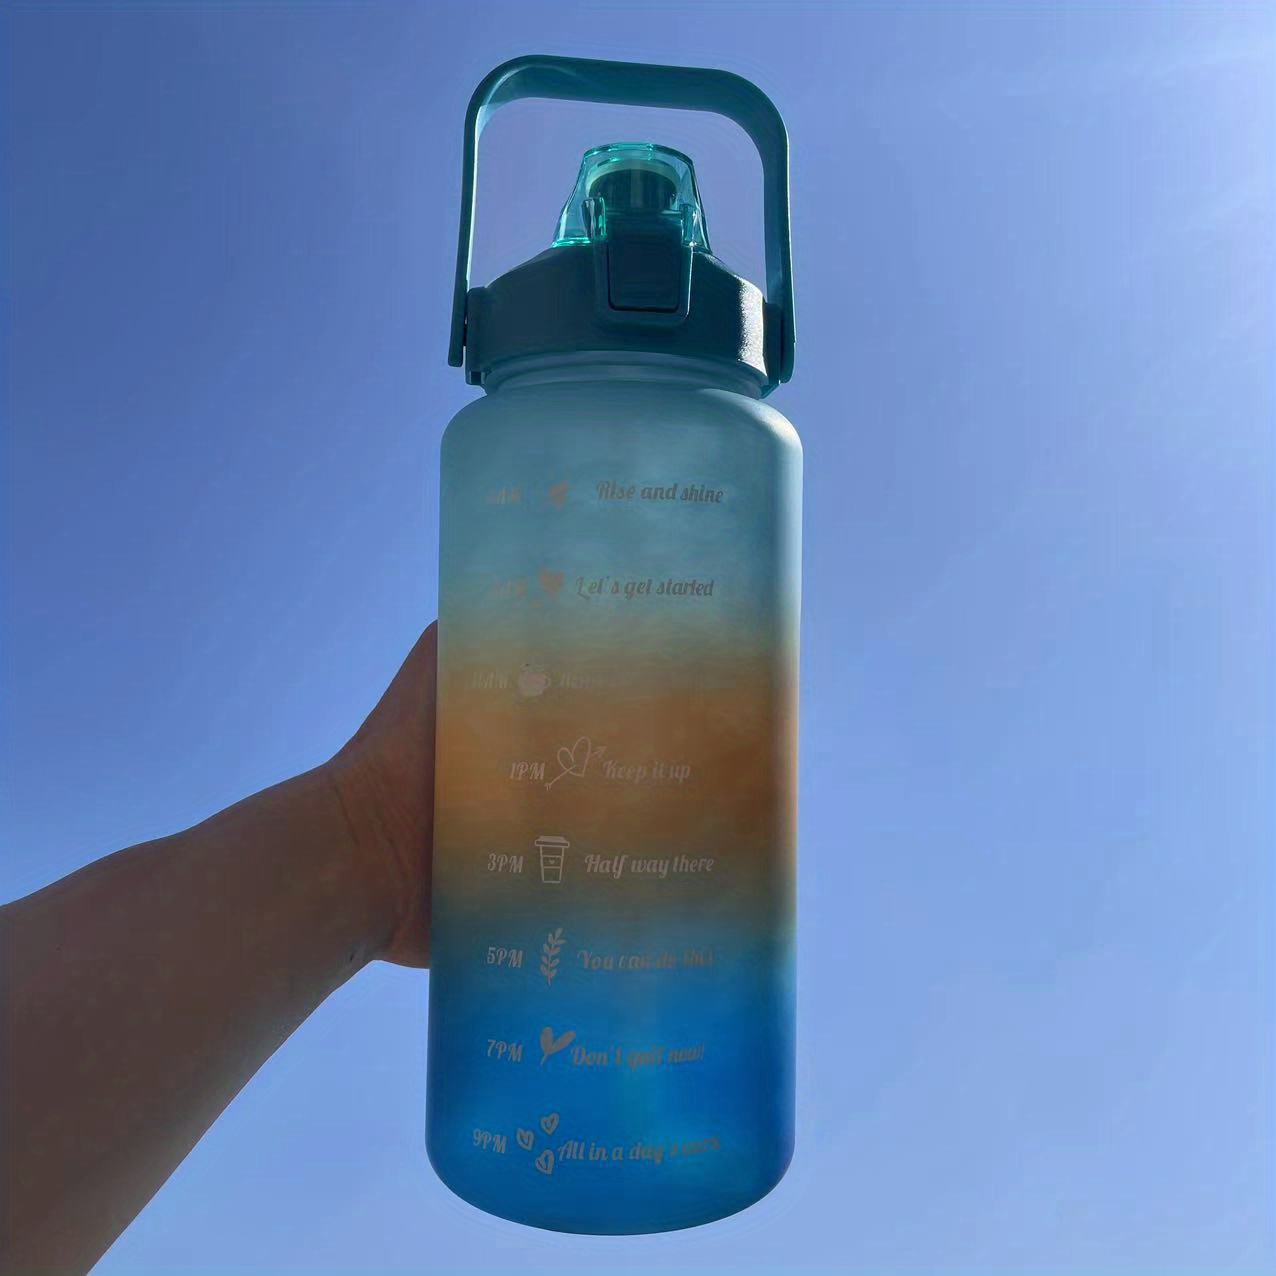 Nalgene-Children's Sports Water Bottle, Portable, Leak-proof, Kids